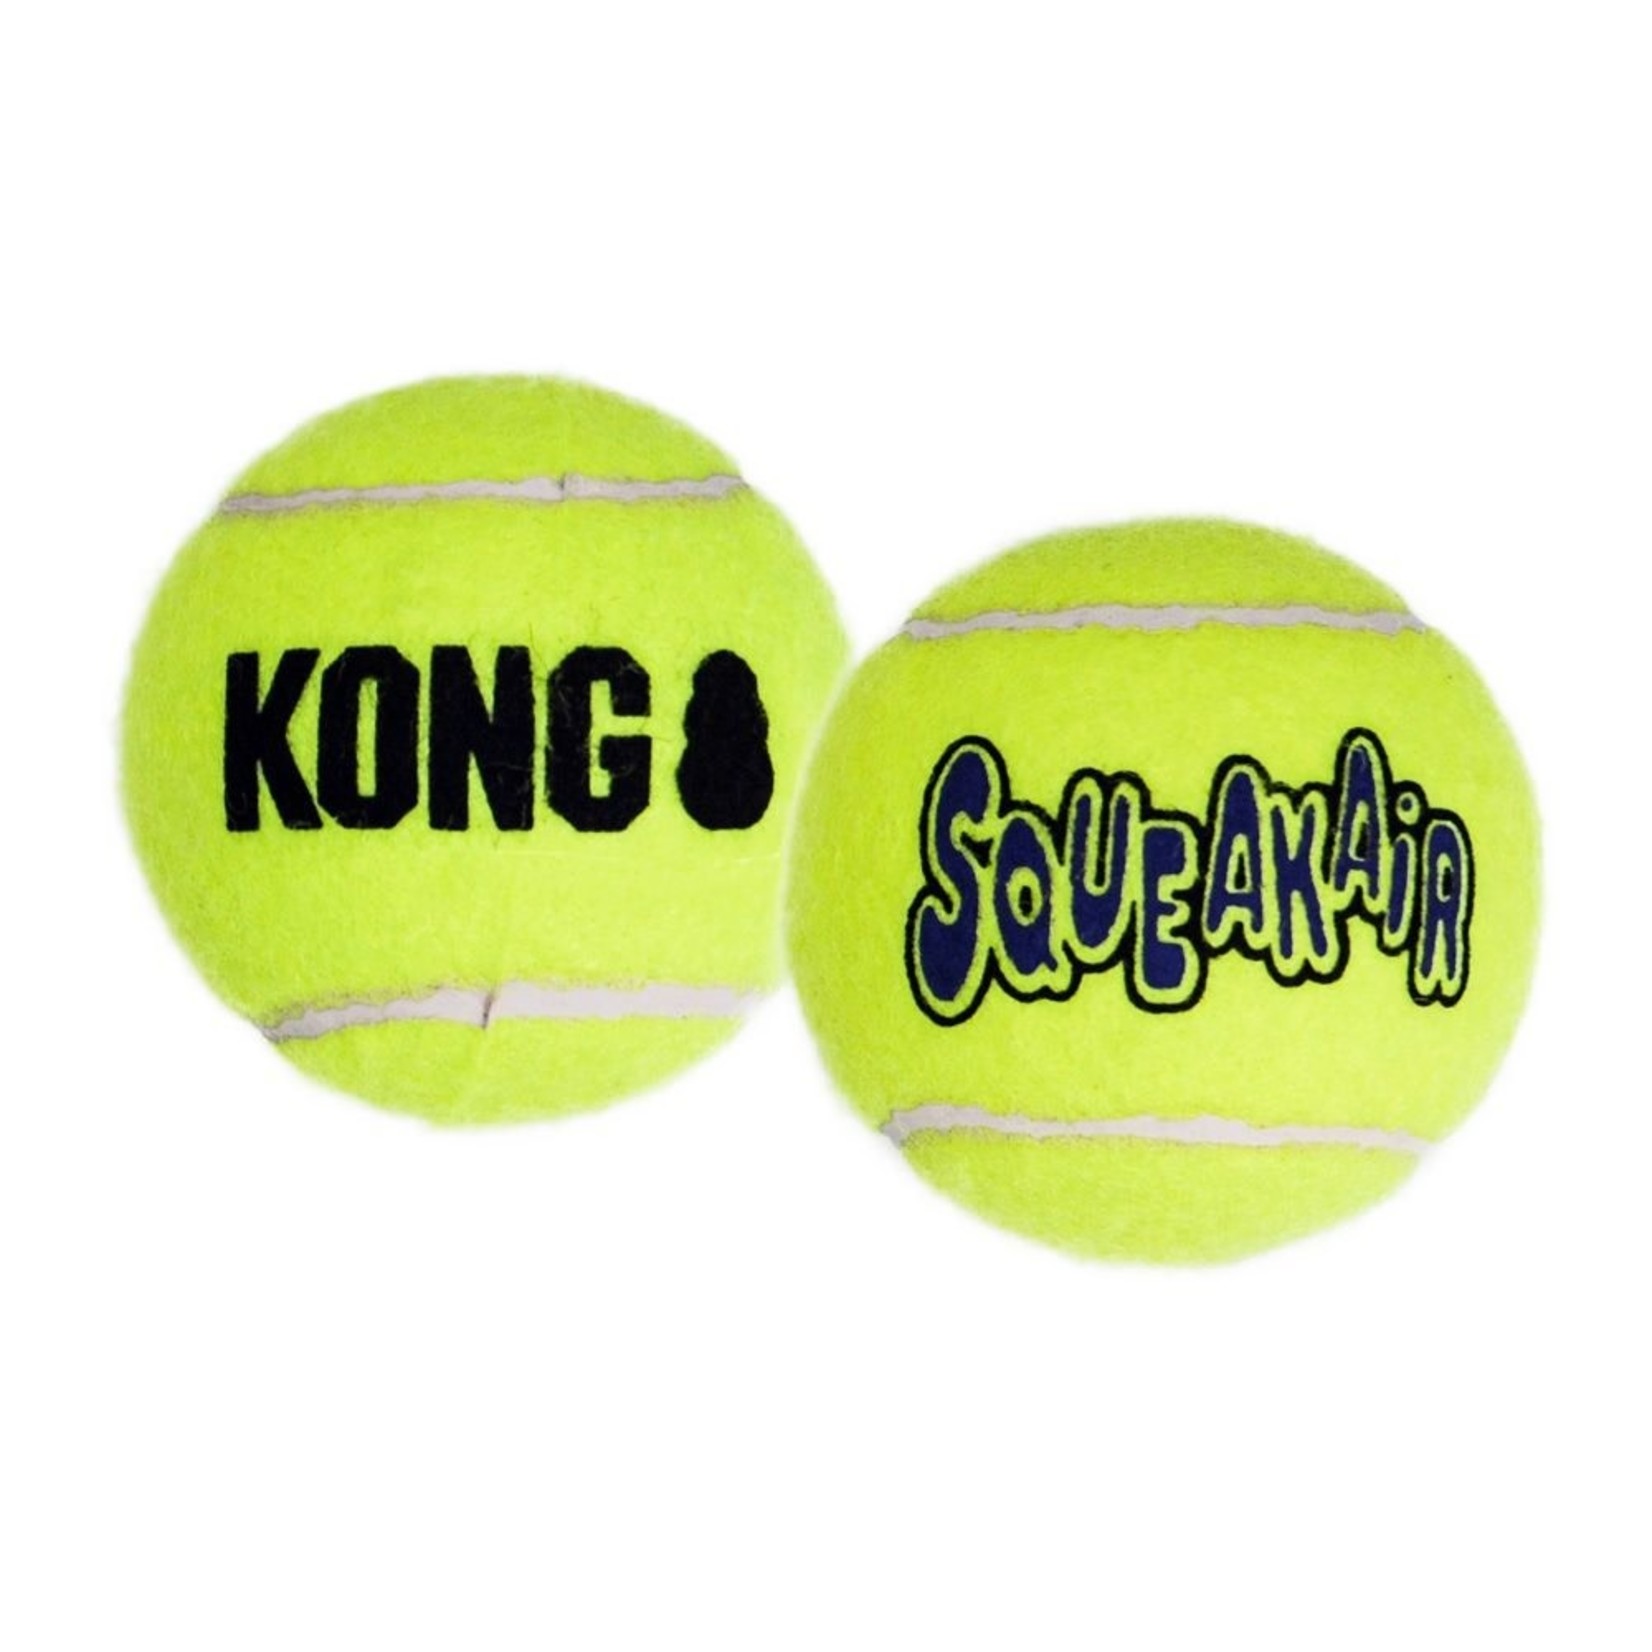 KONG AirDog Squeaker Tennis Ball Dog Toy, Extra Large